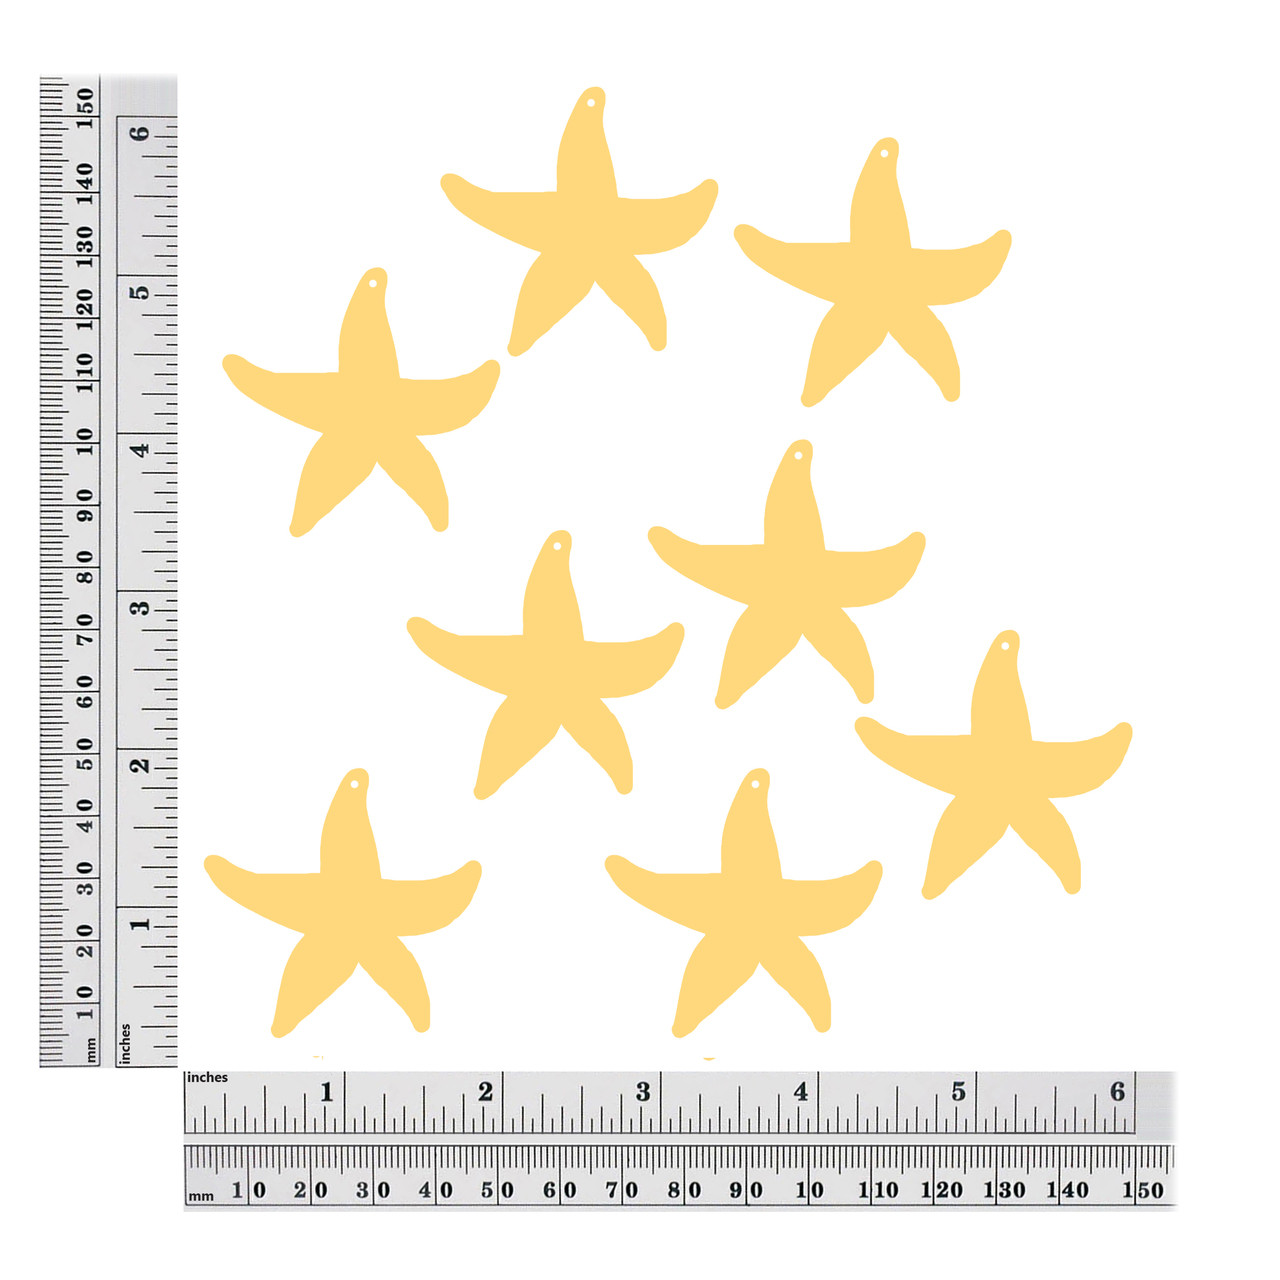 Starfish sequins size chart